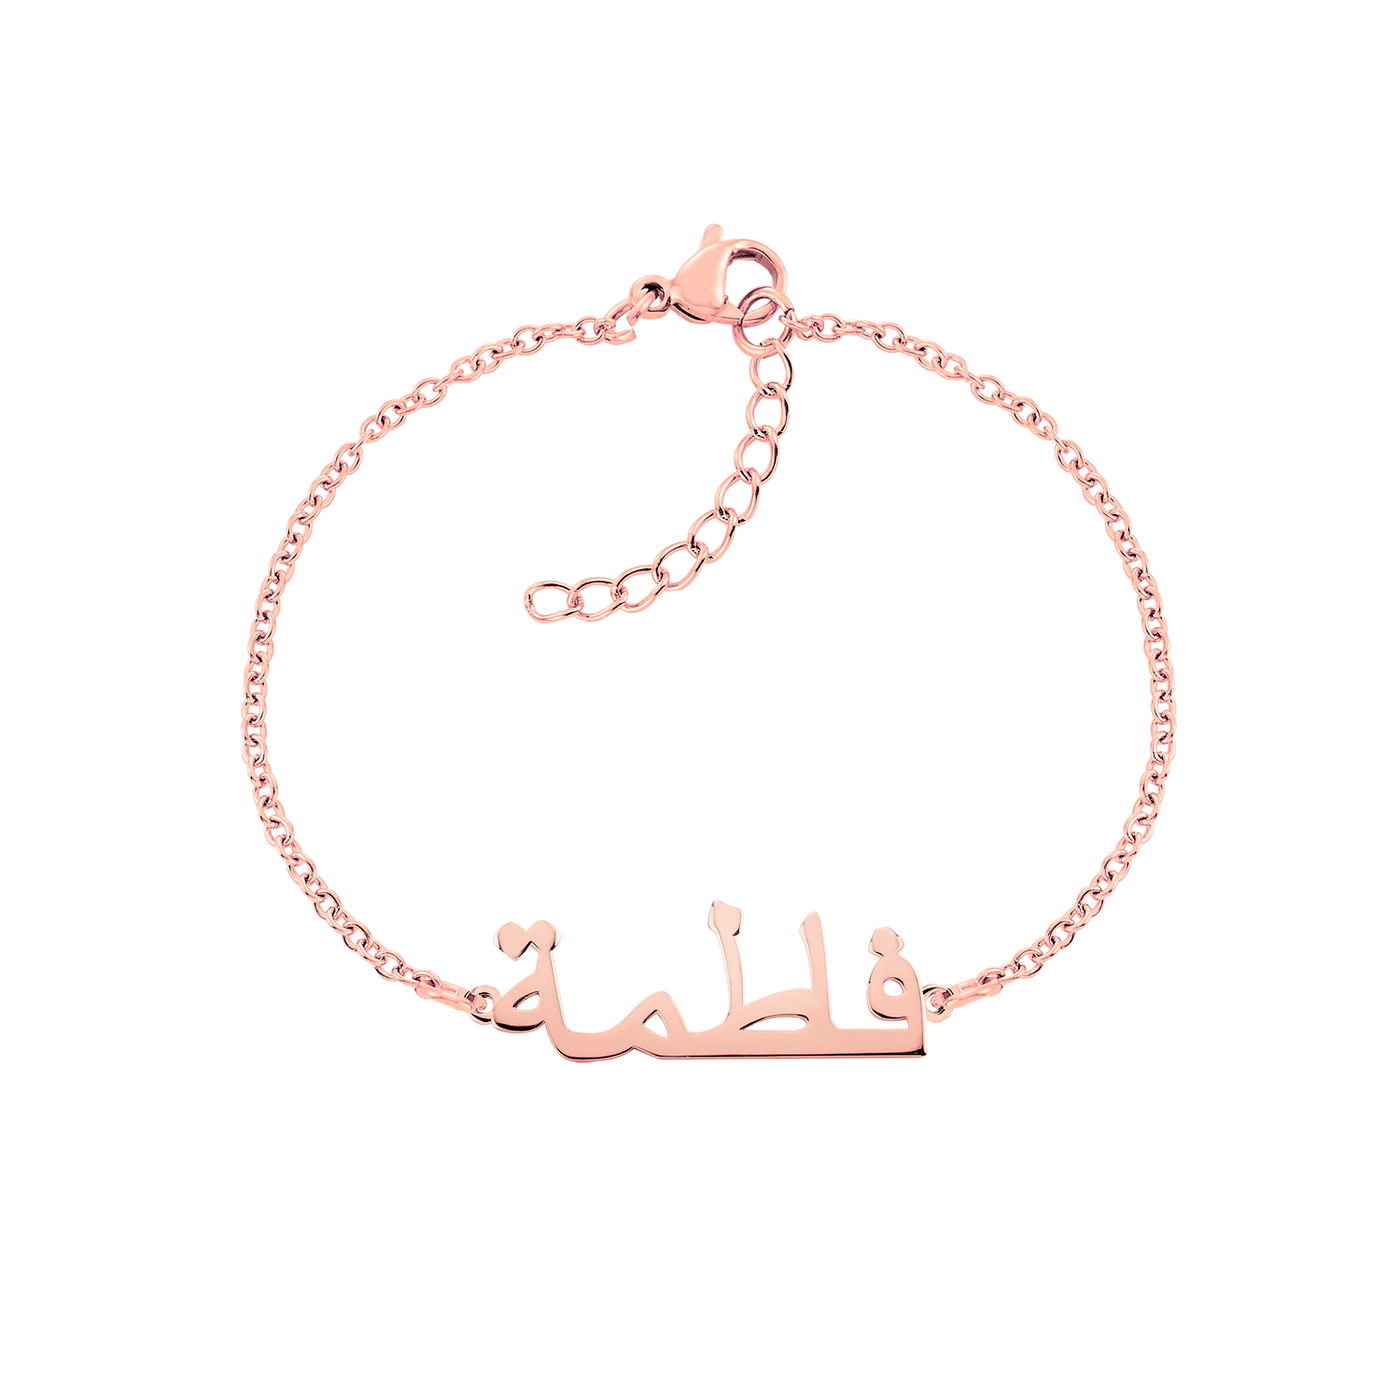 Name bracelet - Arabic variant